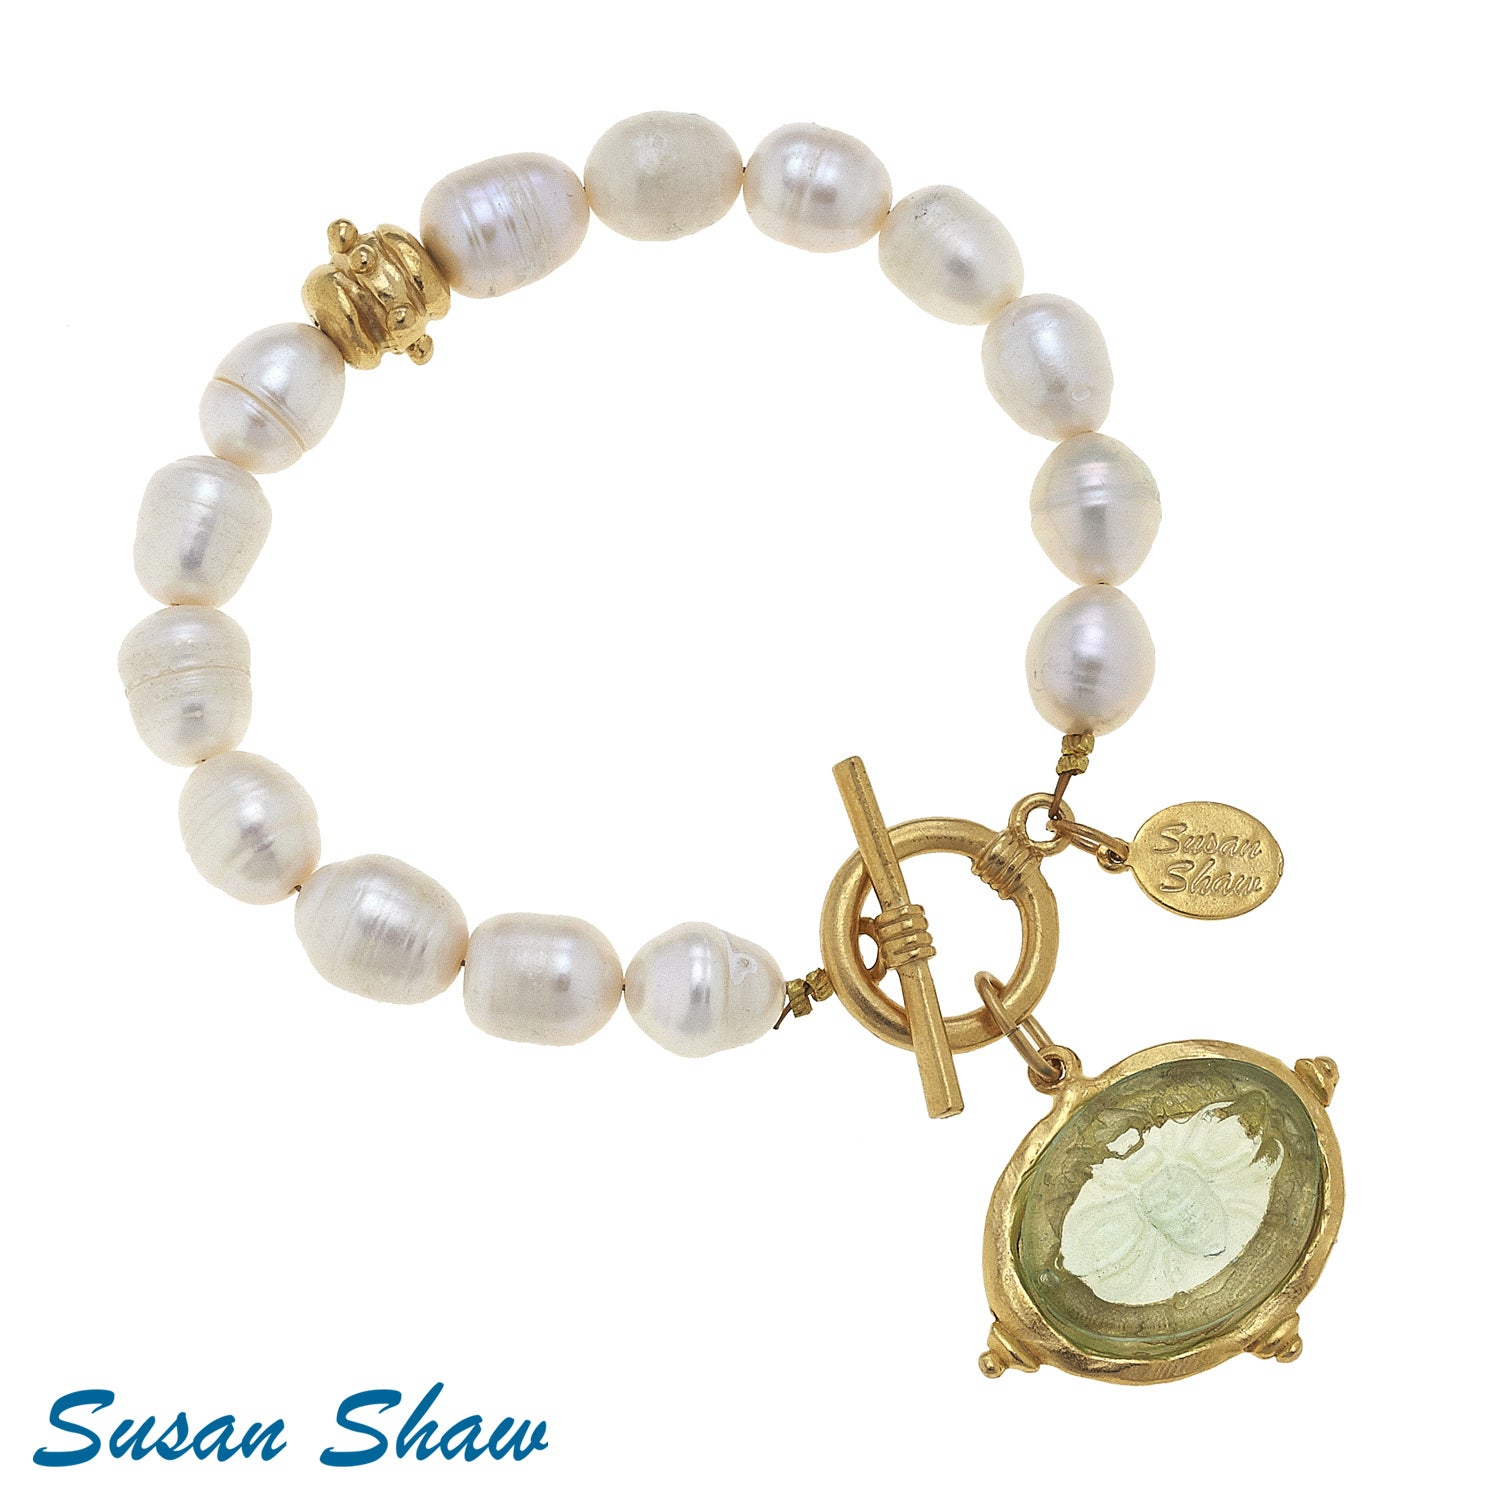 Susan Shaw Clear Venetian Glass Bee Intaglio on Genuine Freshwater Pearl Bracelet